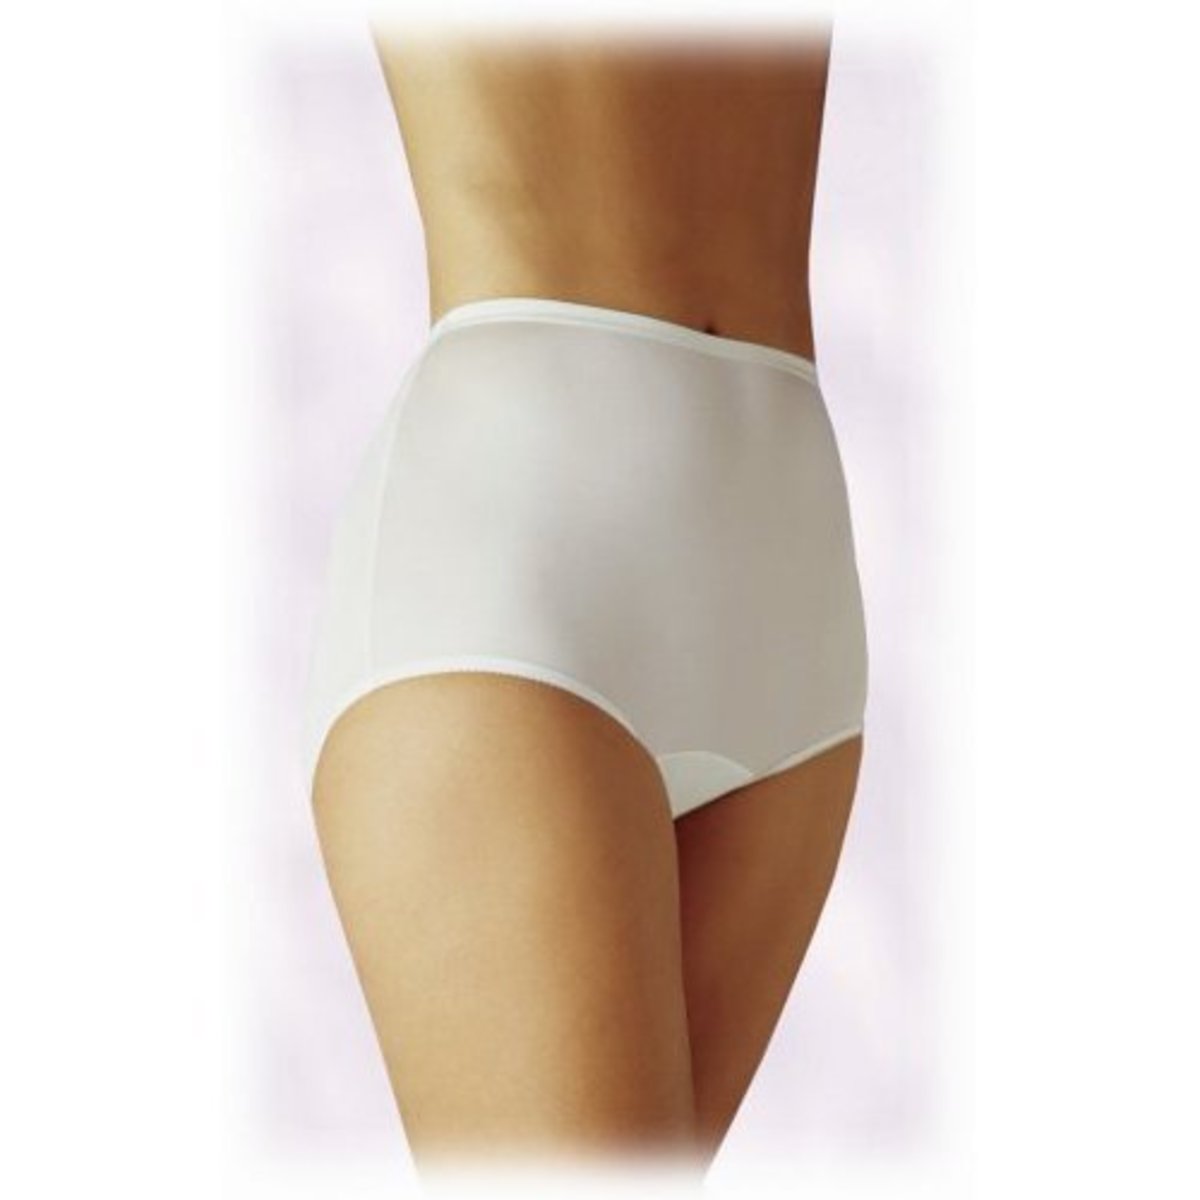 conrad aguilar recommends men wearing panties forum pic